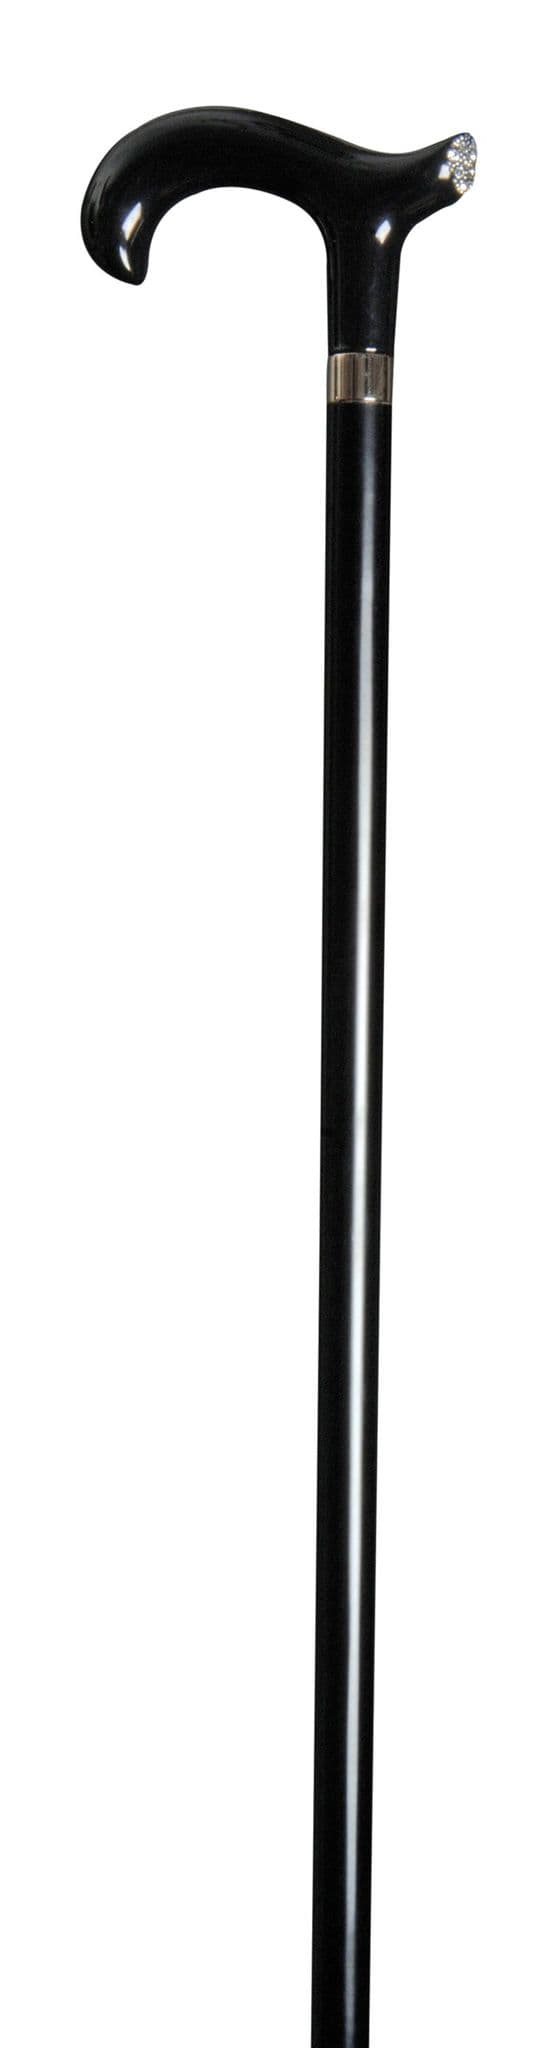 Classic Canes Black derby cane with Swarovski Elements